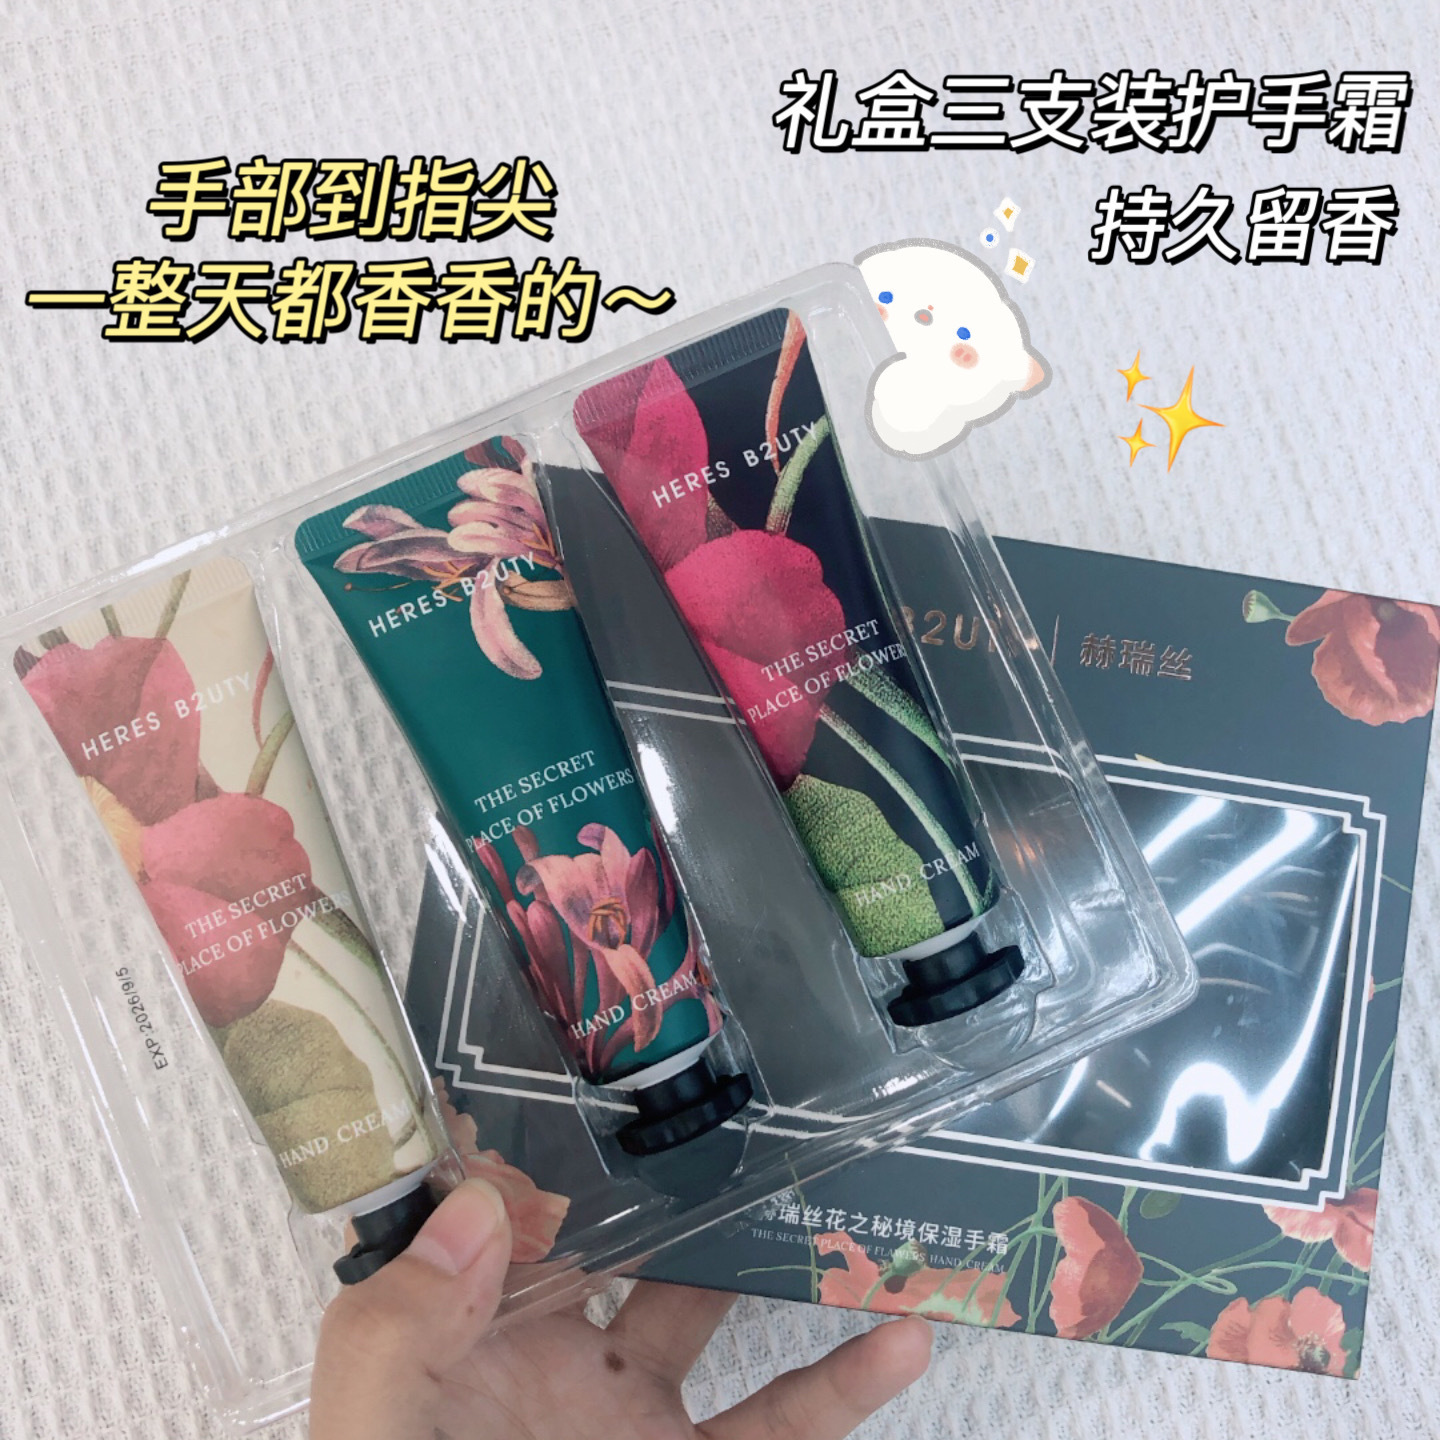 Herry Silk Flower Secret Moisturizing Hand Cream Sets of Boxes Nourishing and Hydrating Refreshing Non-Greasy Hand Cream Hand Gift Box